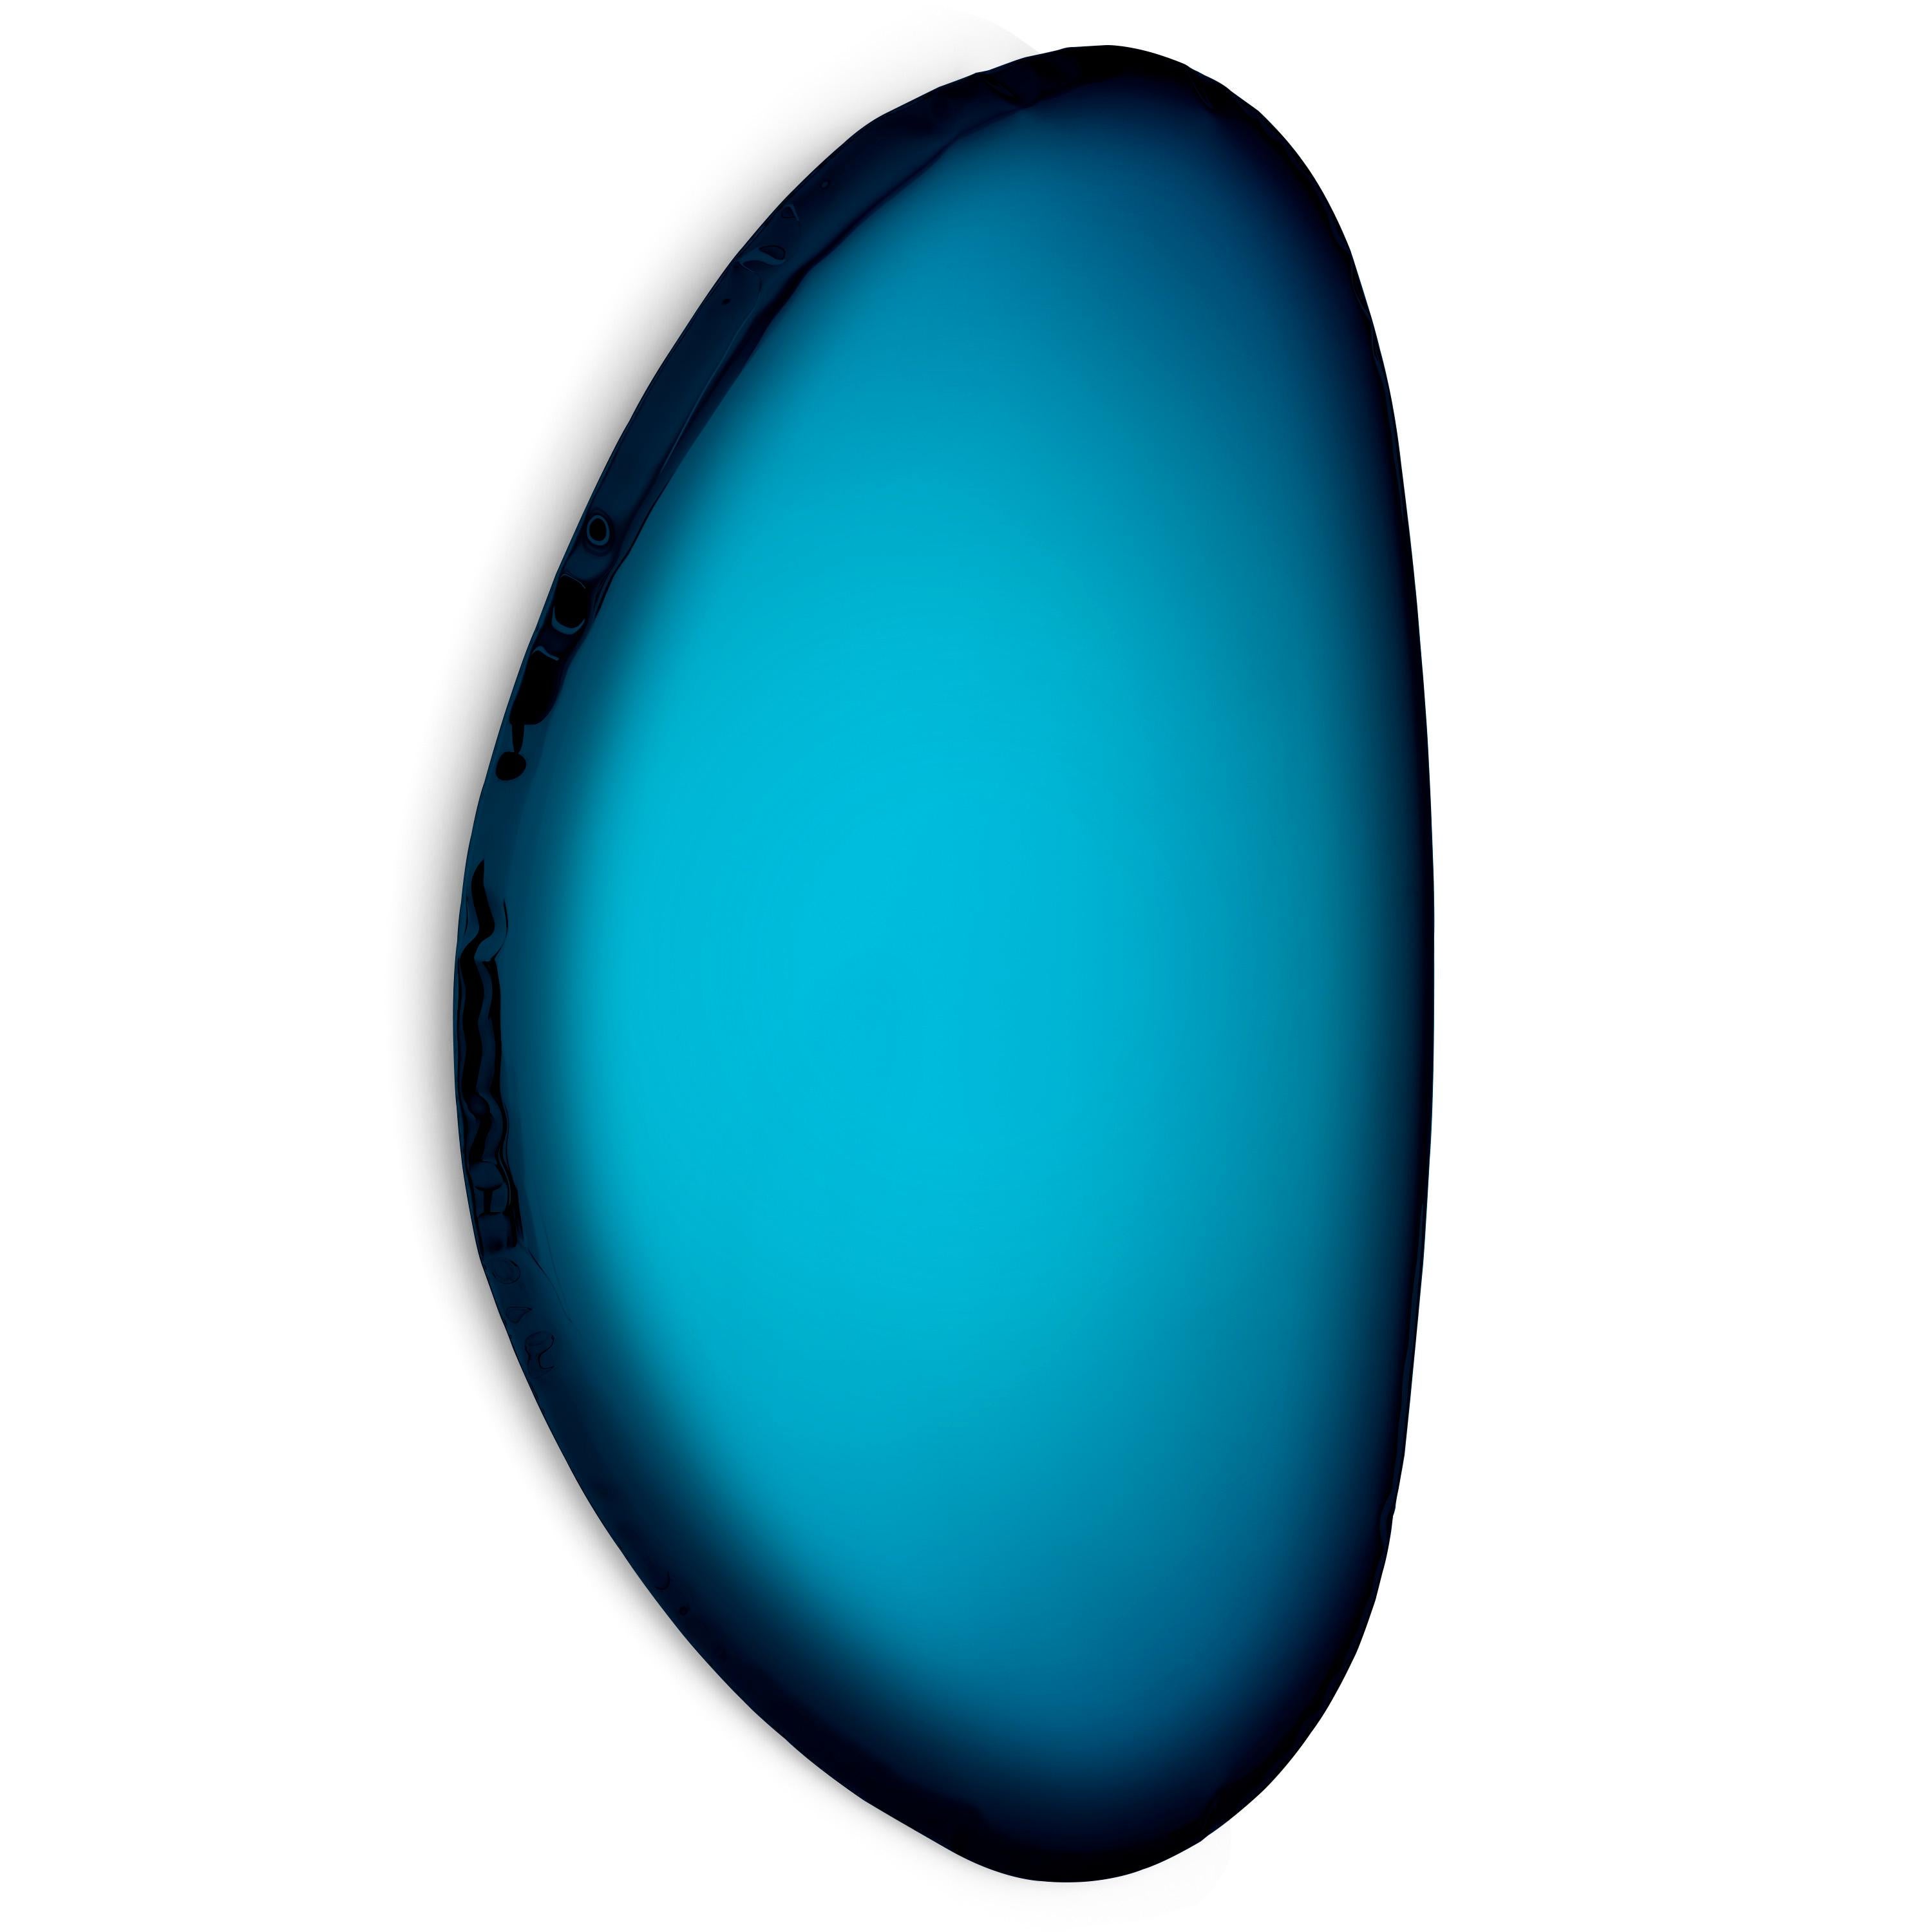 Miroir mural Tafla O2 bleu profond par Zieta
Dimensions : D 6 x L 97 x H 150 cm 
Matériau : Acier inoxydable.
Finition : Bleu espace profond.
Finitions disponibles : Acier inoxydable, blanc mat, saphir/émeraude, saphir, émeraude, bleu espace